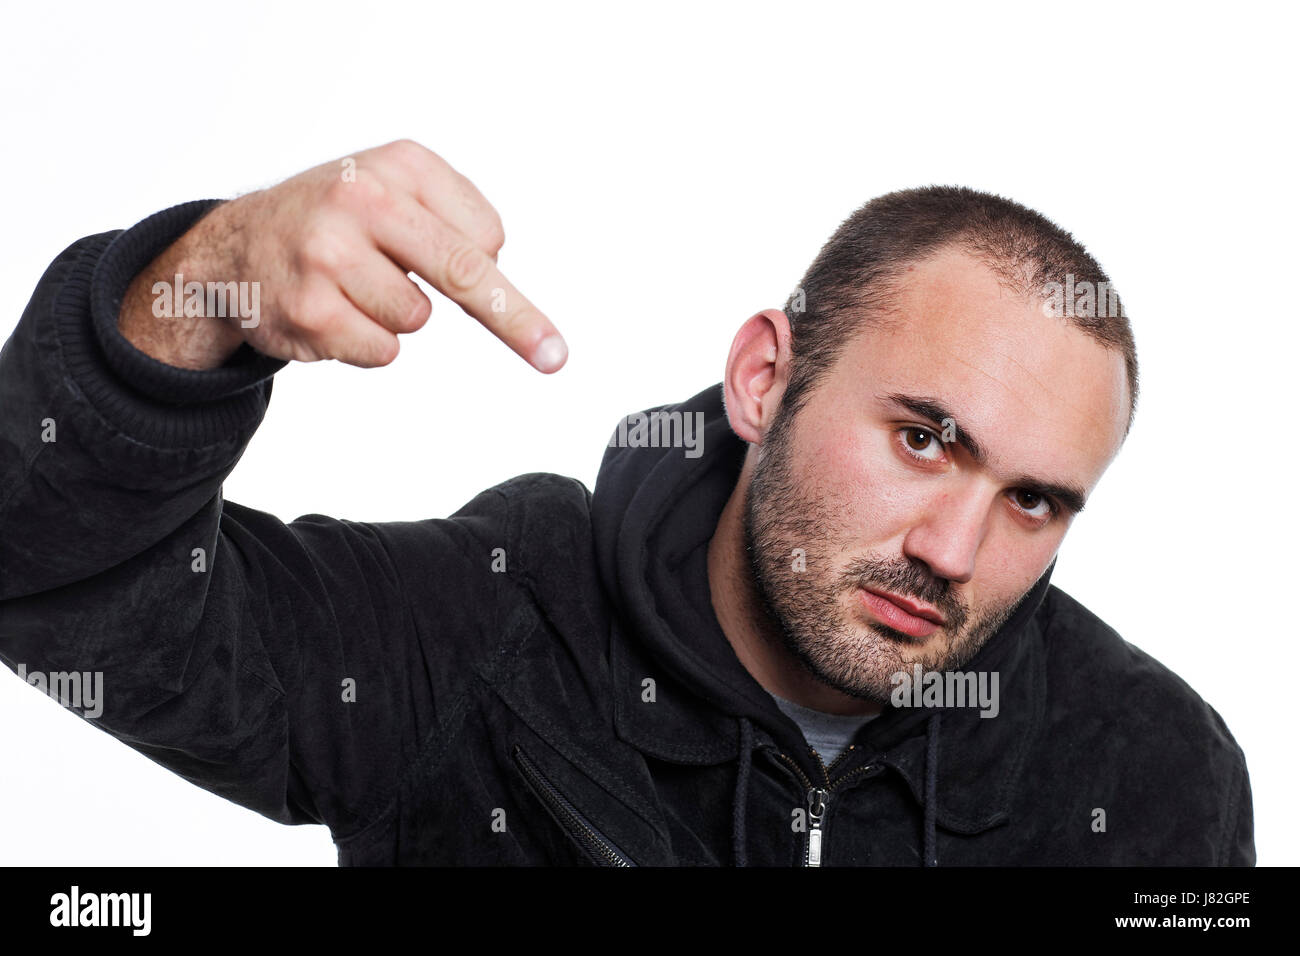 Geste Finger Porträt schlecht peccant böse böse schlecht schlecht Gewalt  junge Bursche Stockfotografie - Alamy